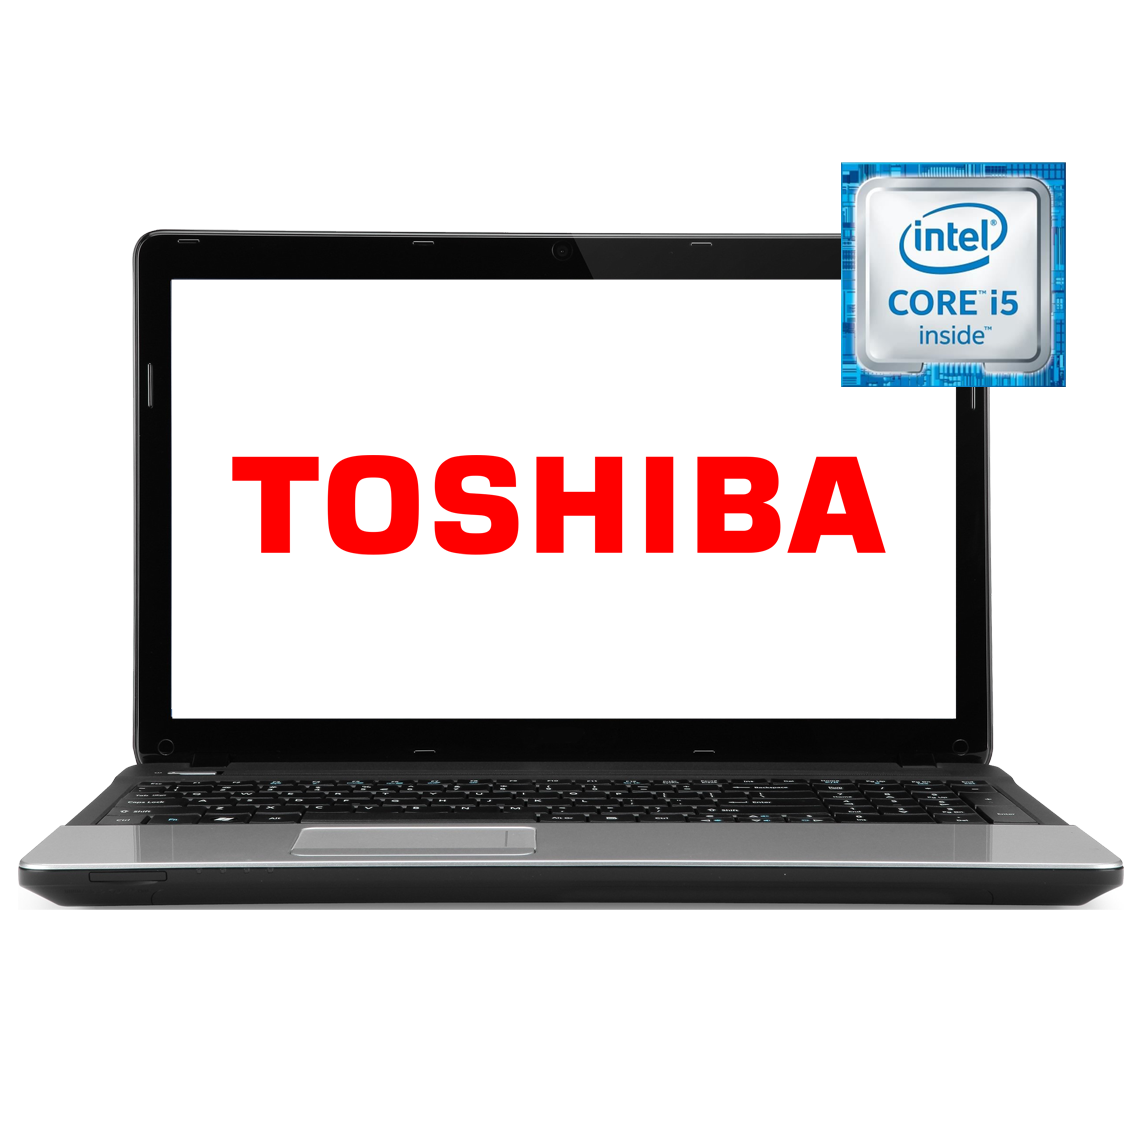 Toshiba - 15 inch Core i5 1st Gen